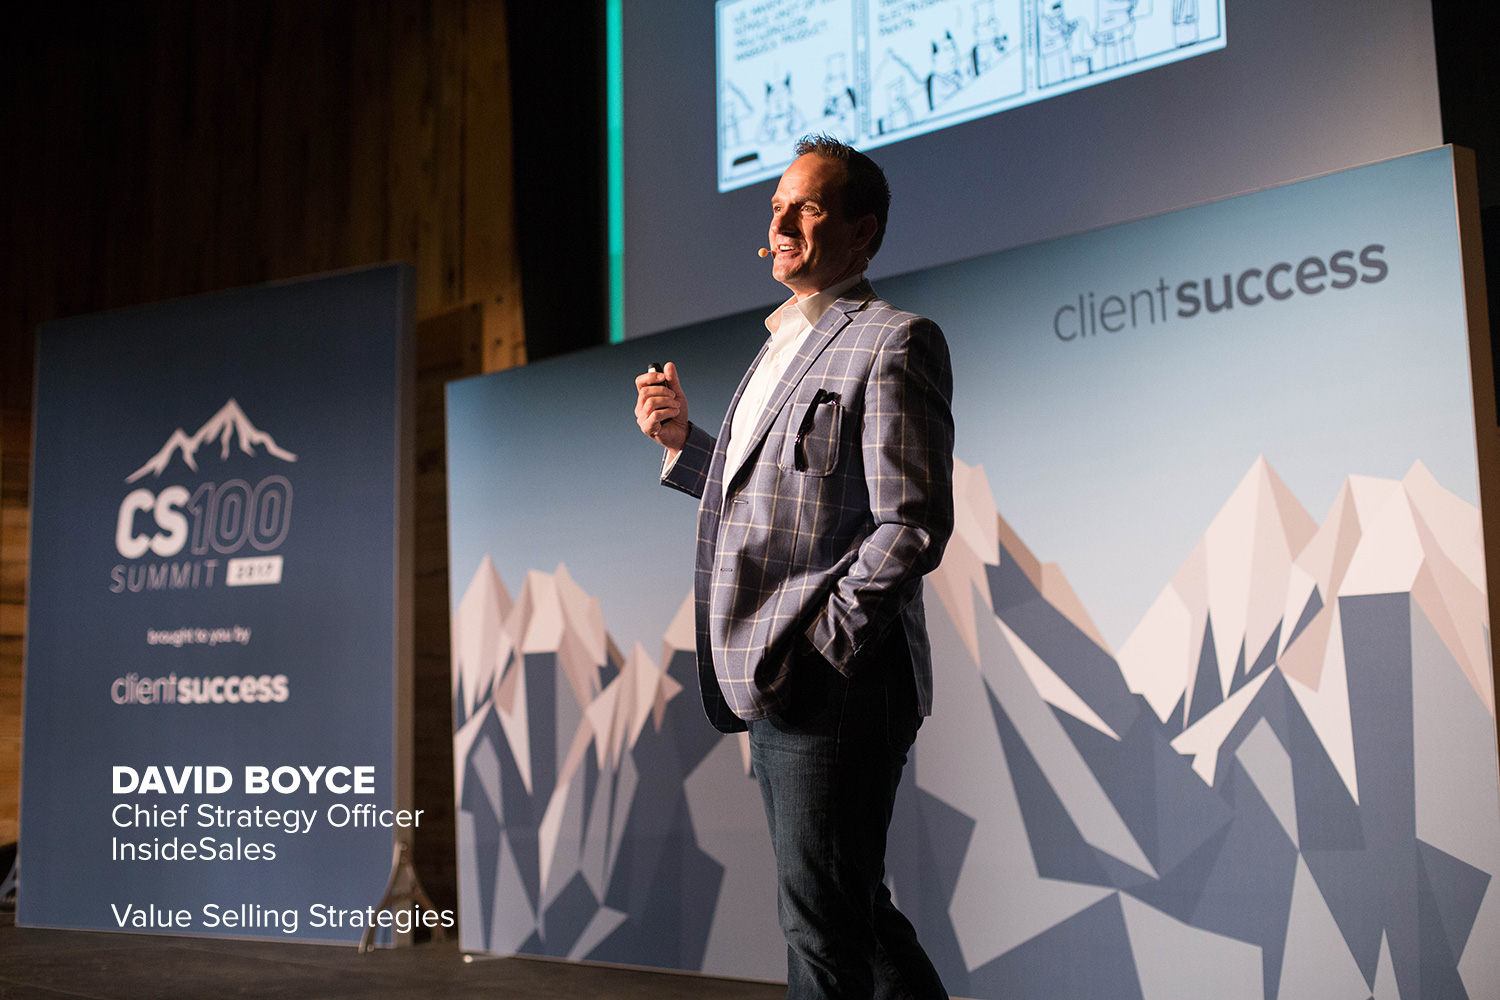 cs100-summit-clientsuccess-david-boyce-insidesales.jpg